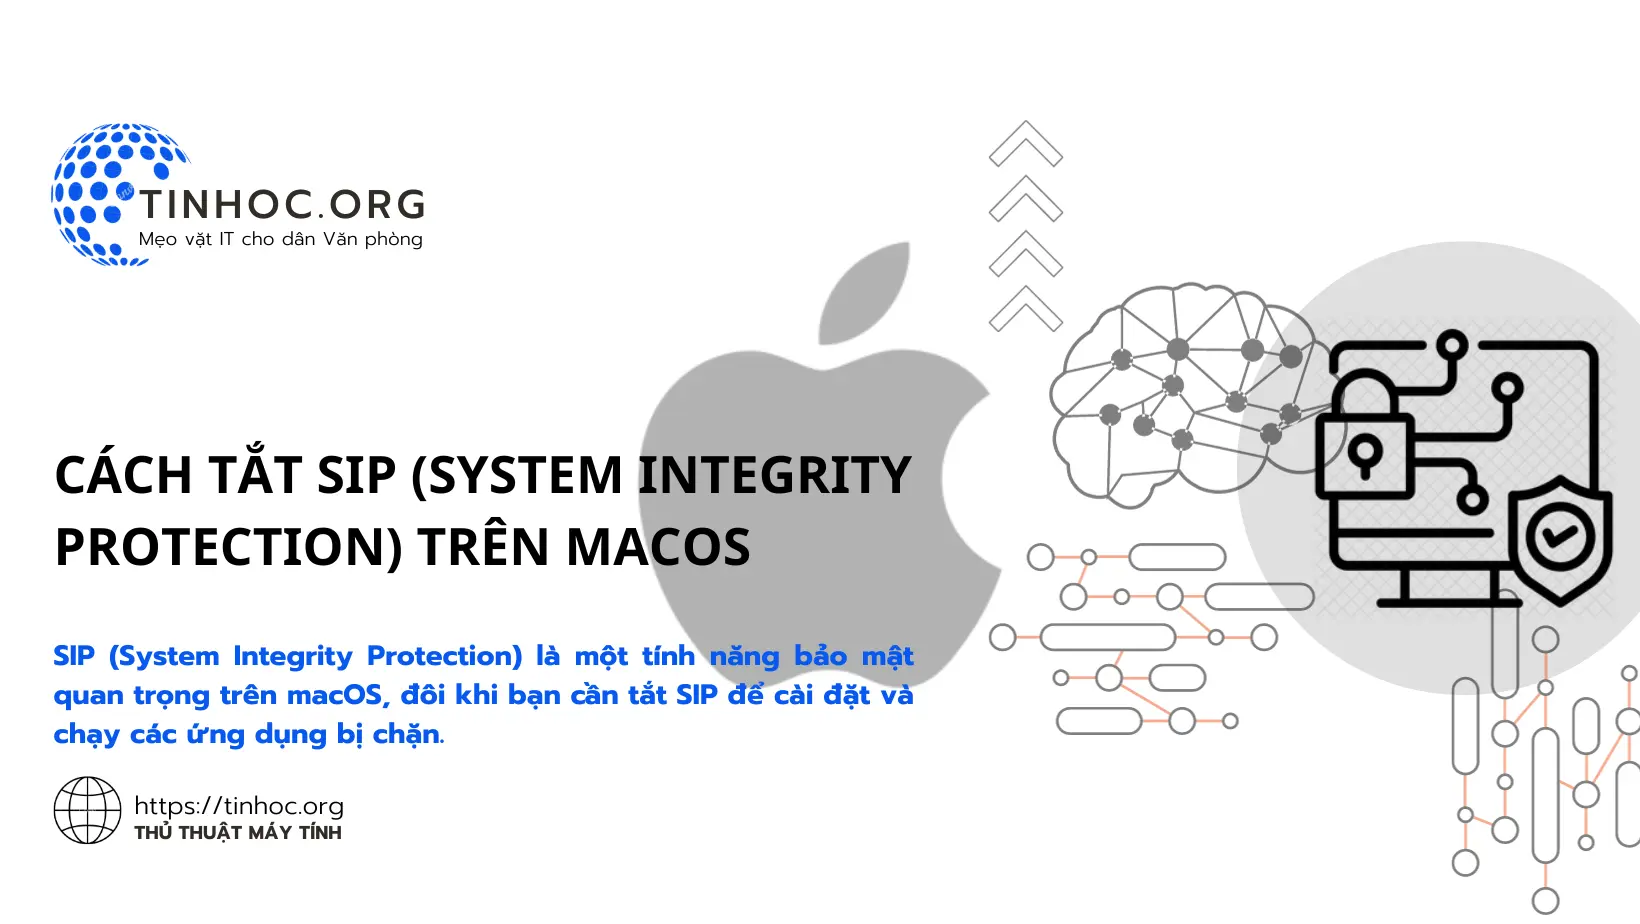 Cách tắt SIP (System Integrity Protection) trên macOS